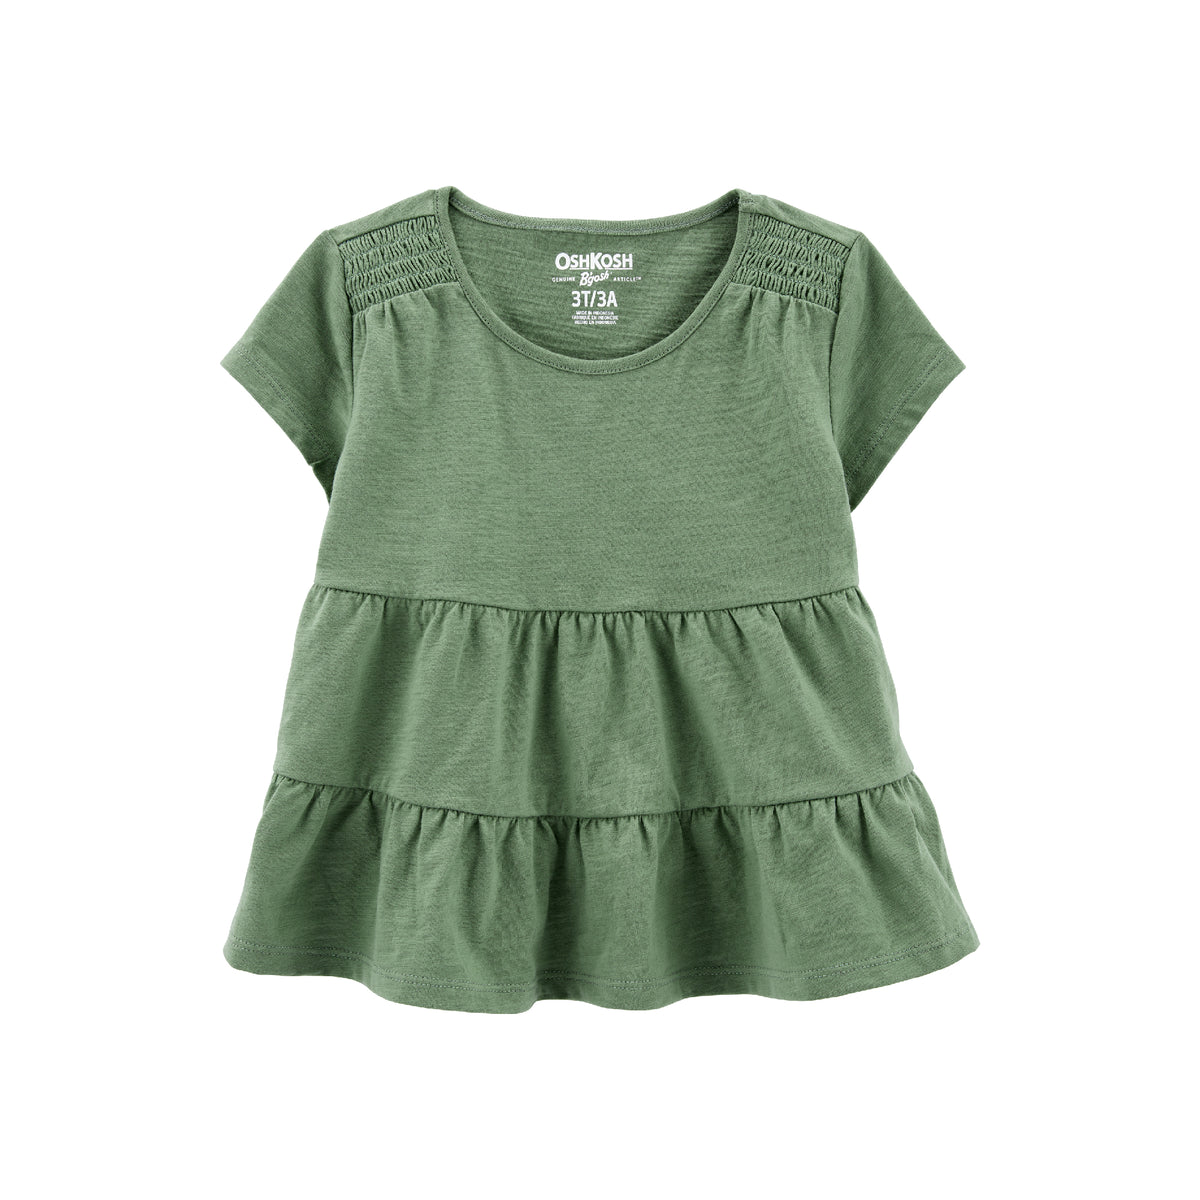 OshKosh gray green plain short-sleeved top (2T-5T)